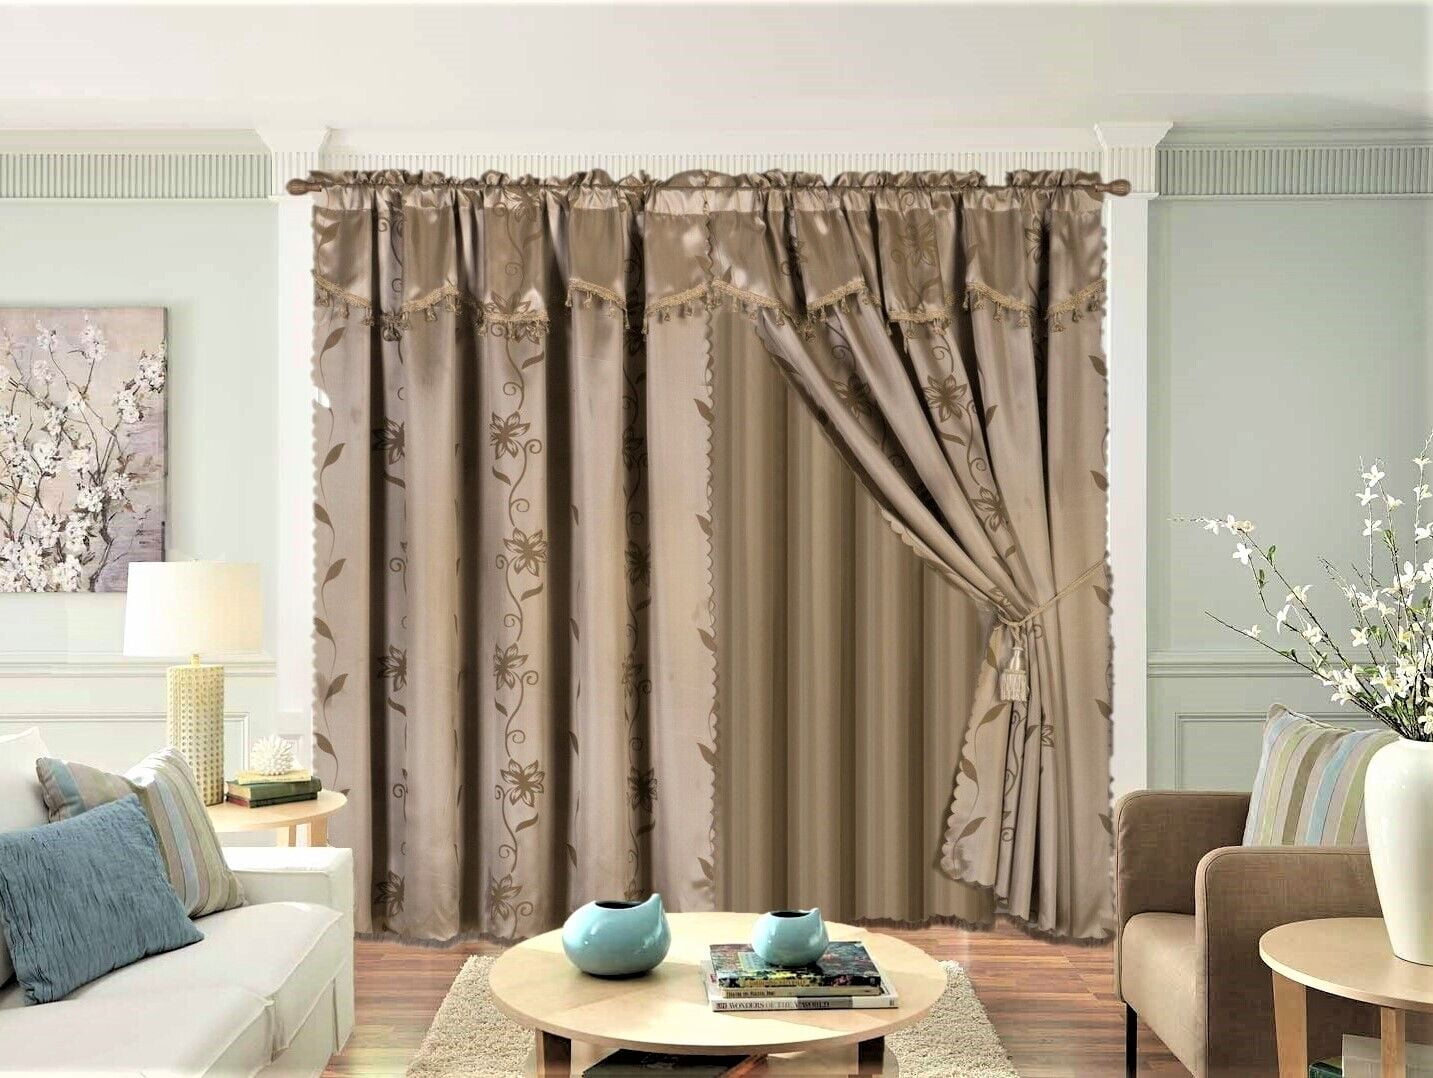 Curtain Rod - Ace Curtains & Furnishing